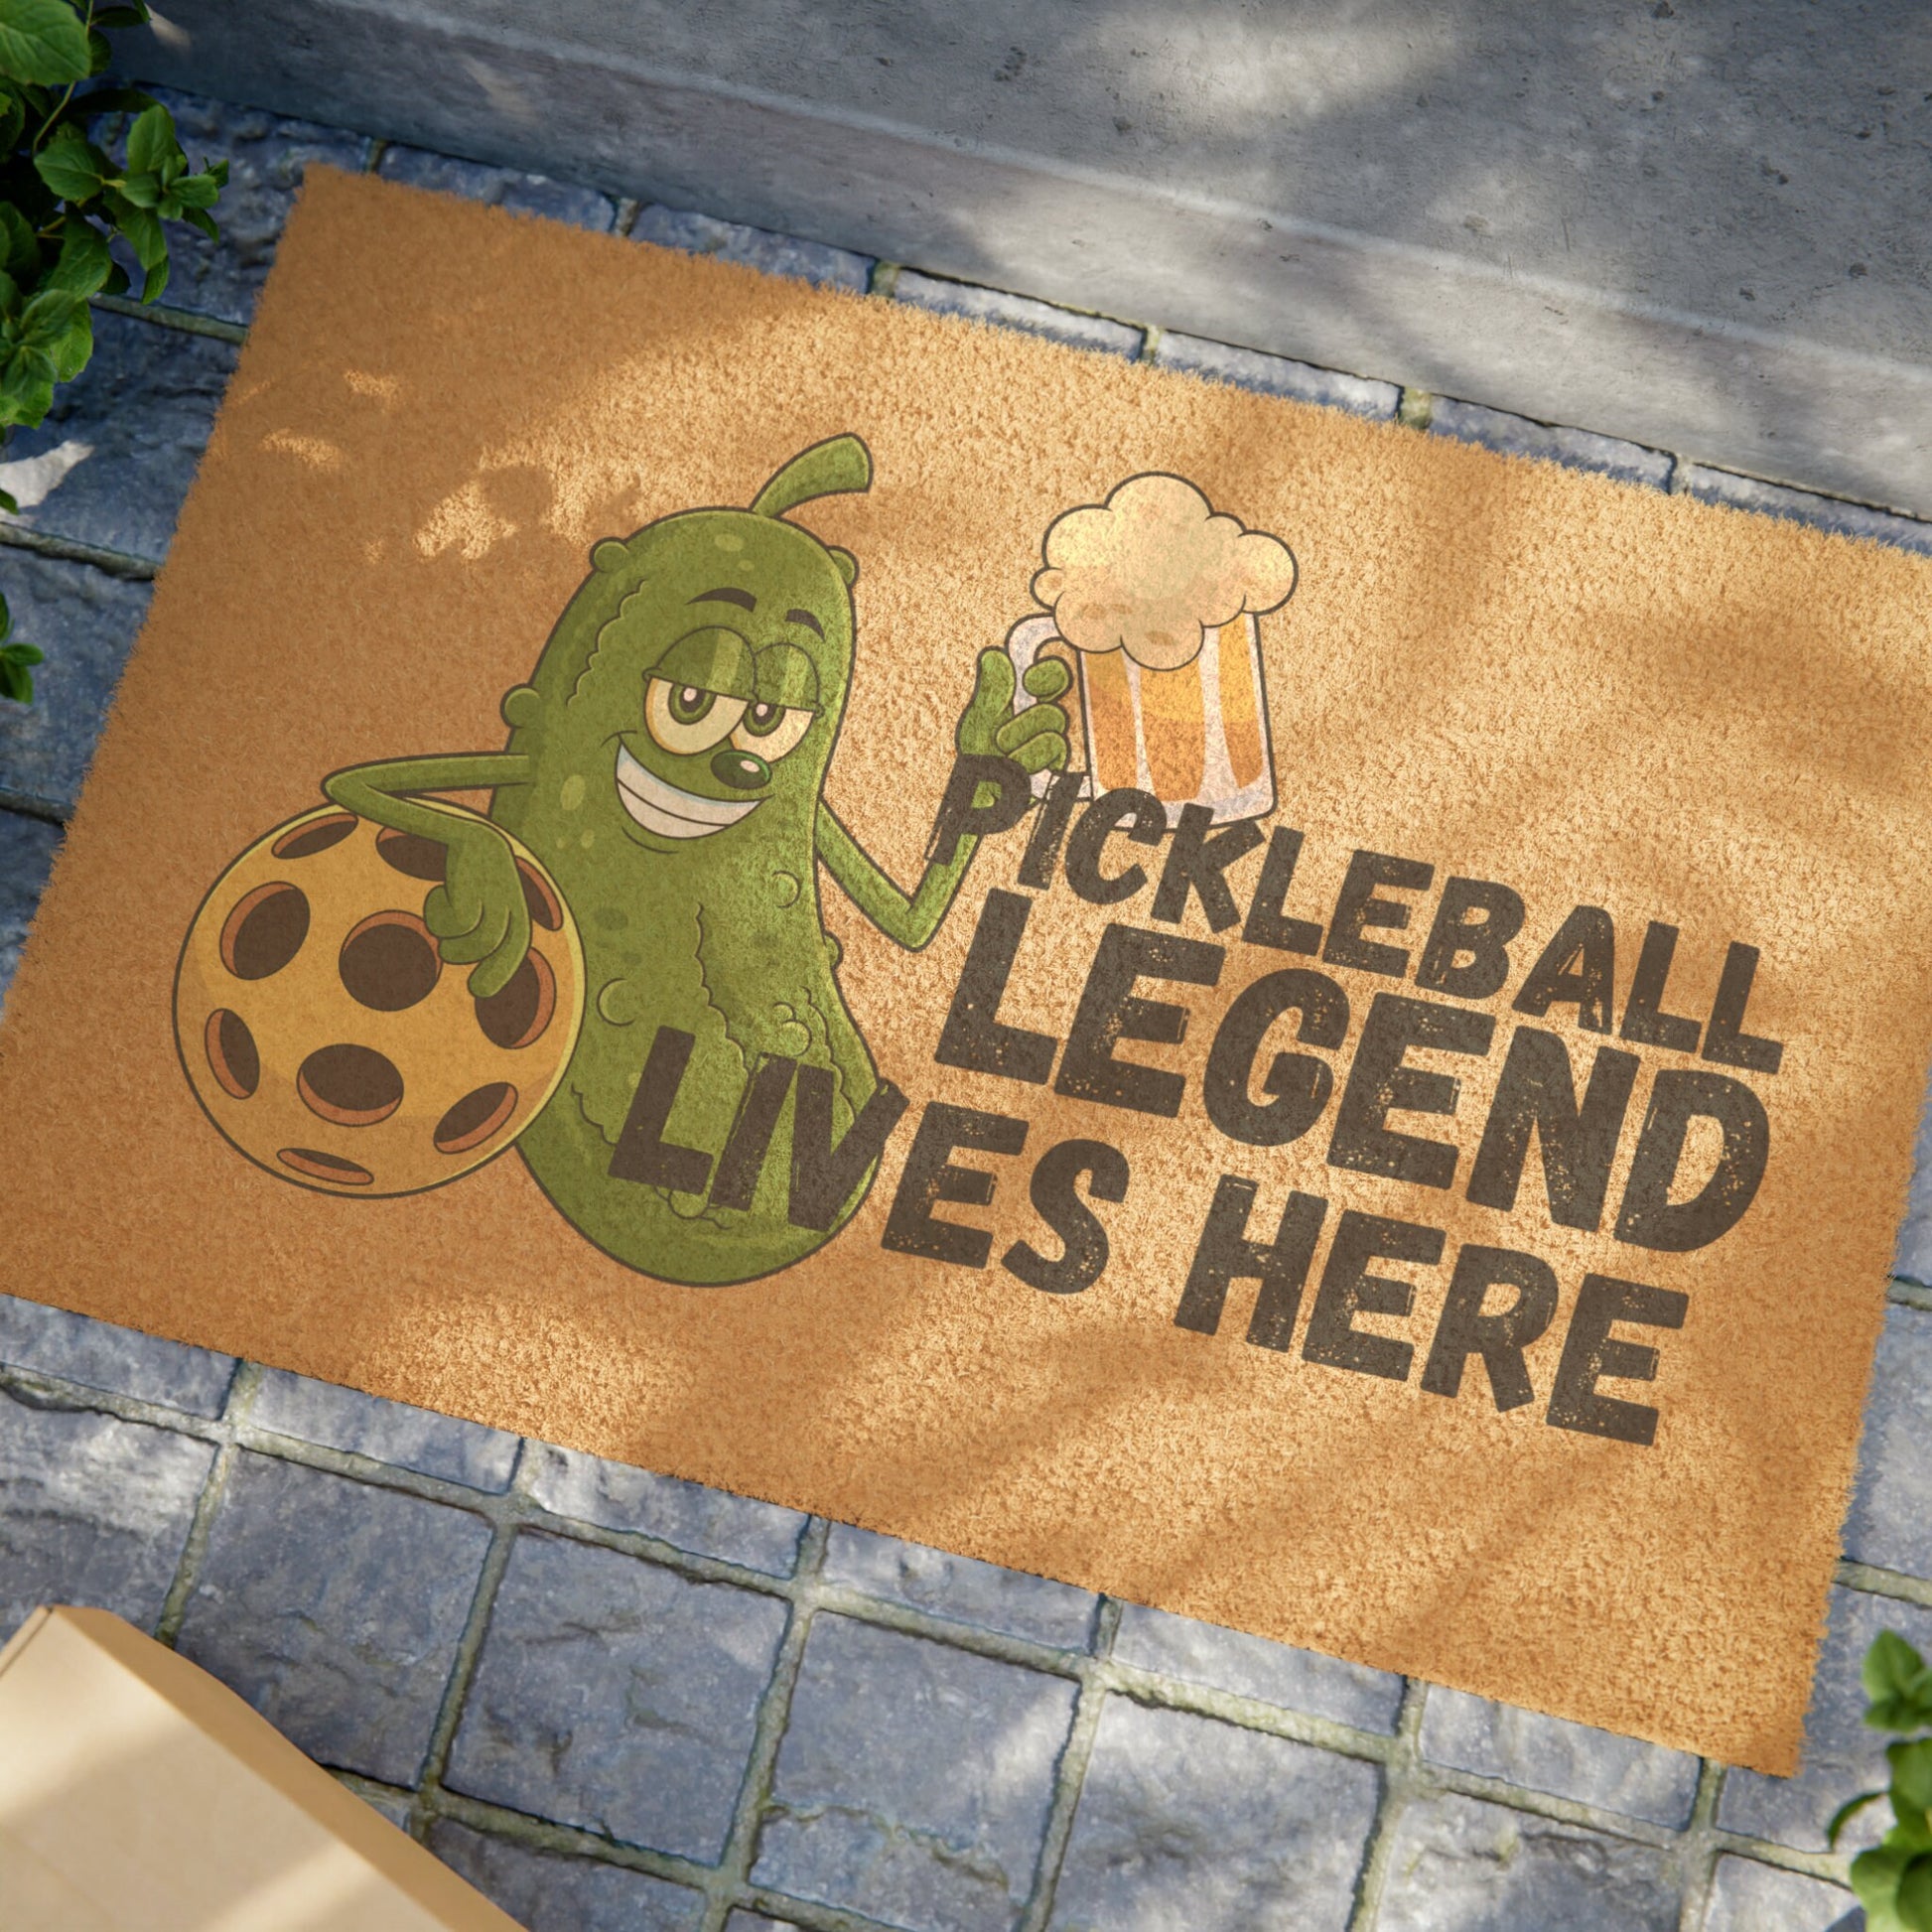 Pickleball Doormat, Pickleball Legend, Outdoor Welcome Mat, Pickle Ball Entryway Decor, Gift for Team, Sports Mat